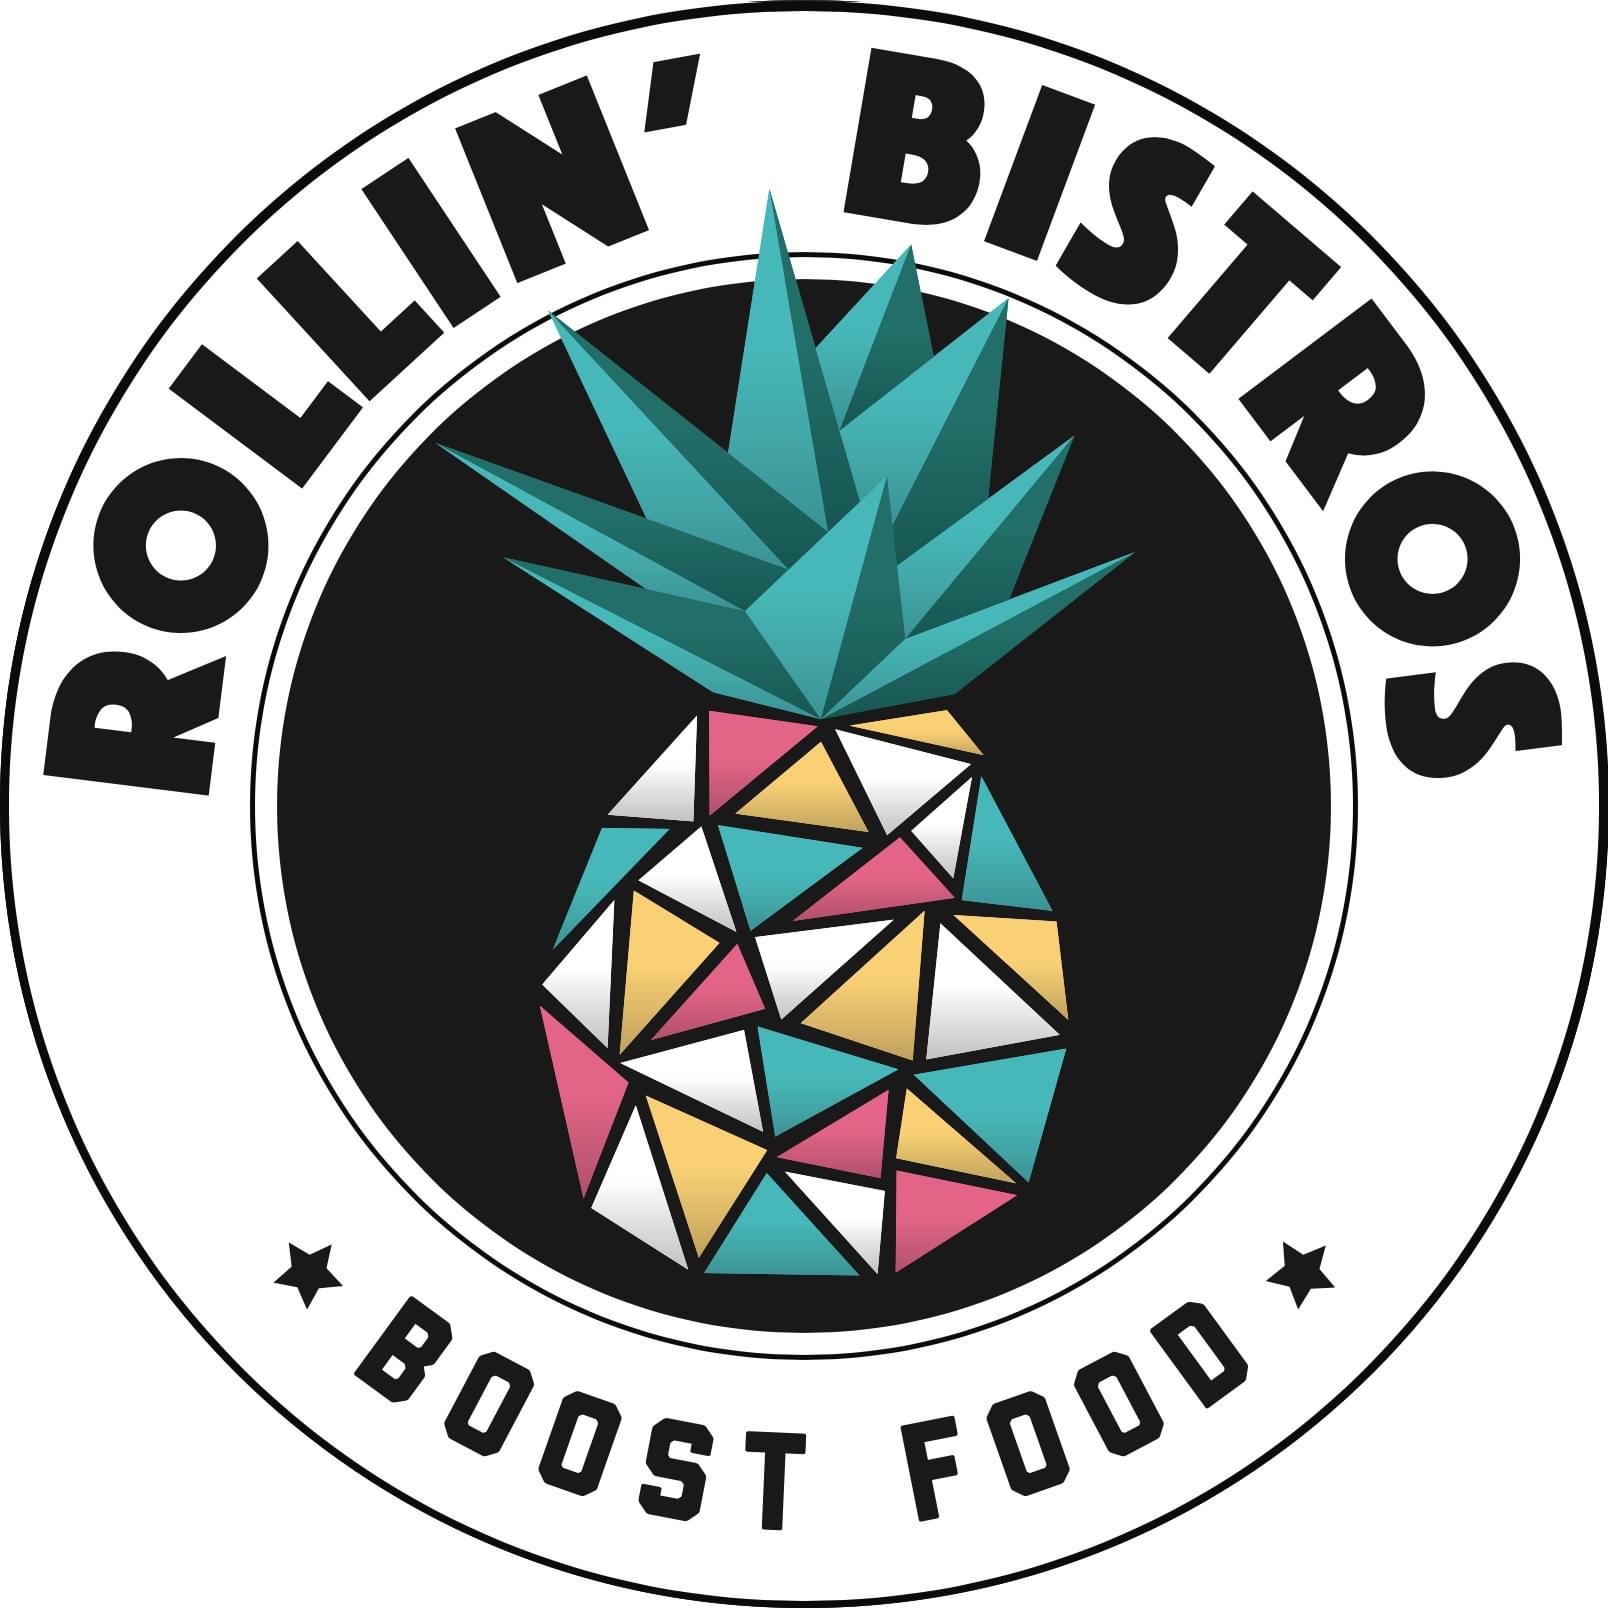 Logotyp för Rollin' bistros